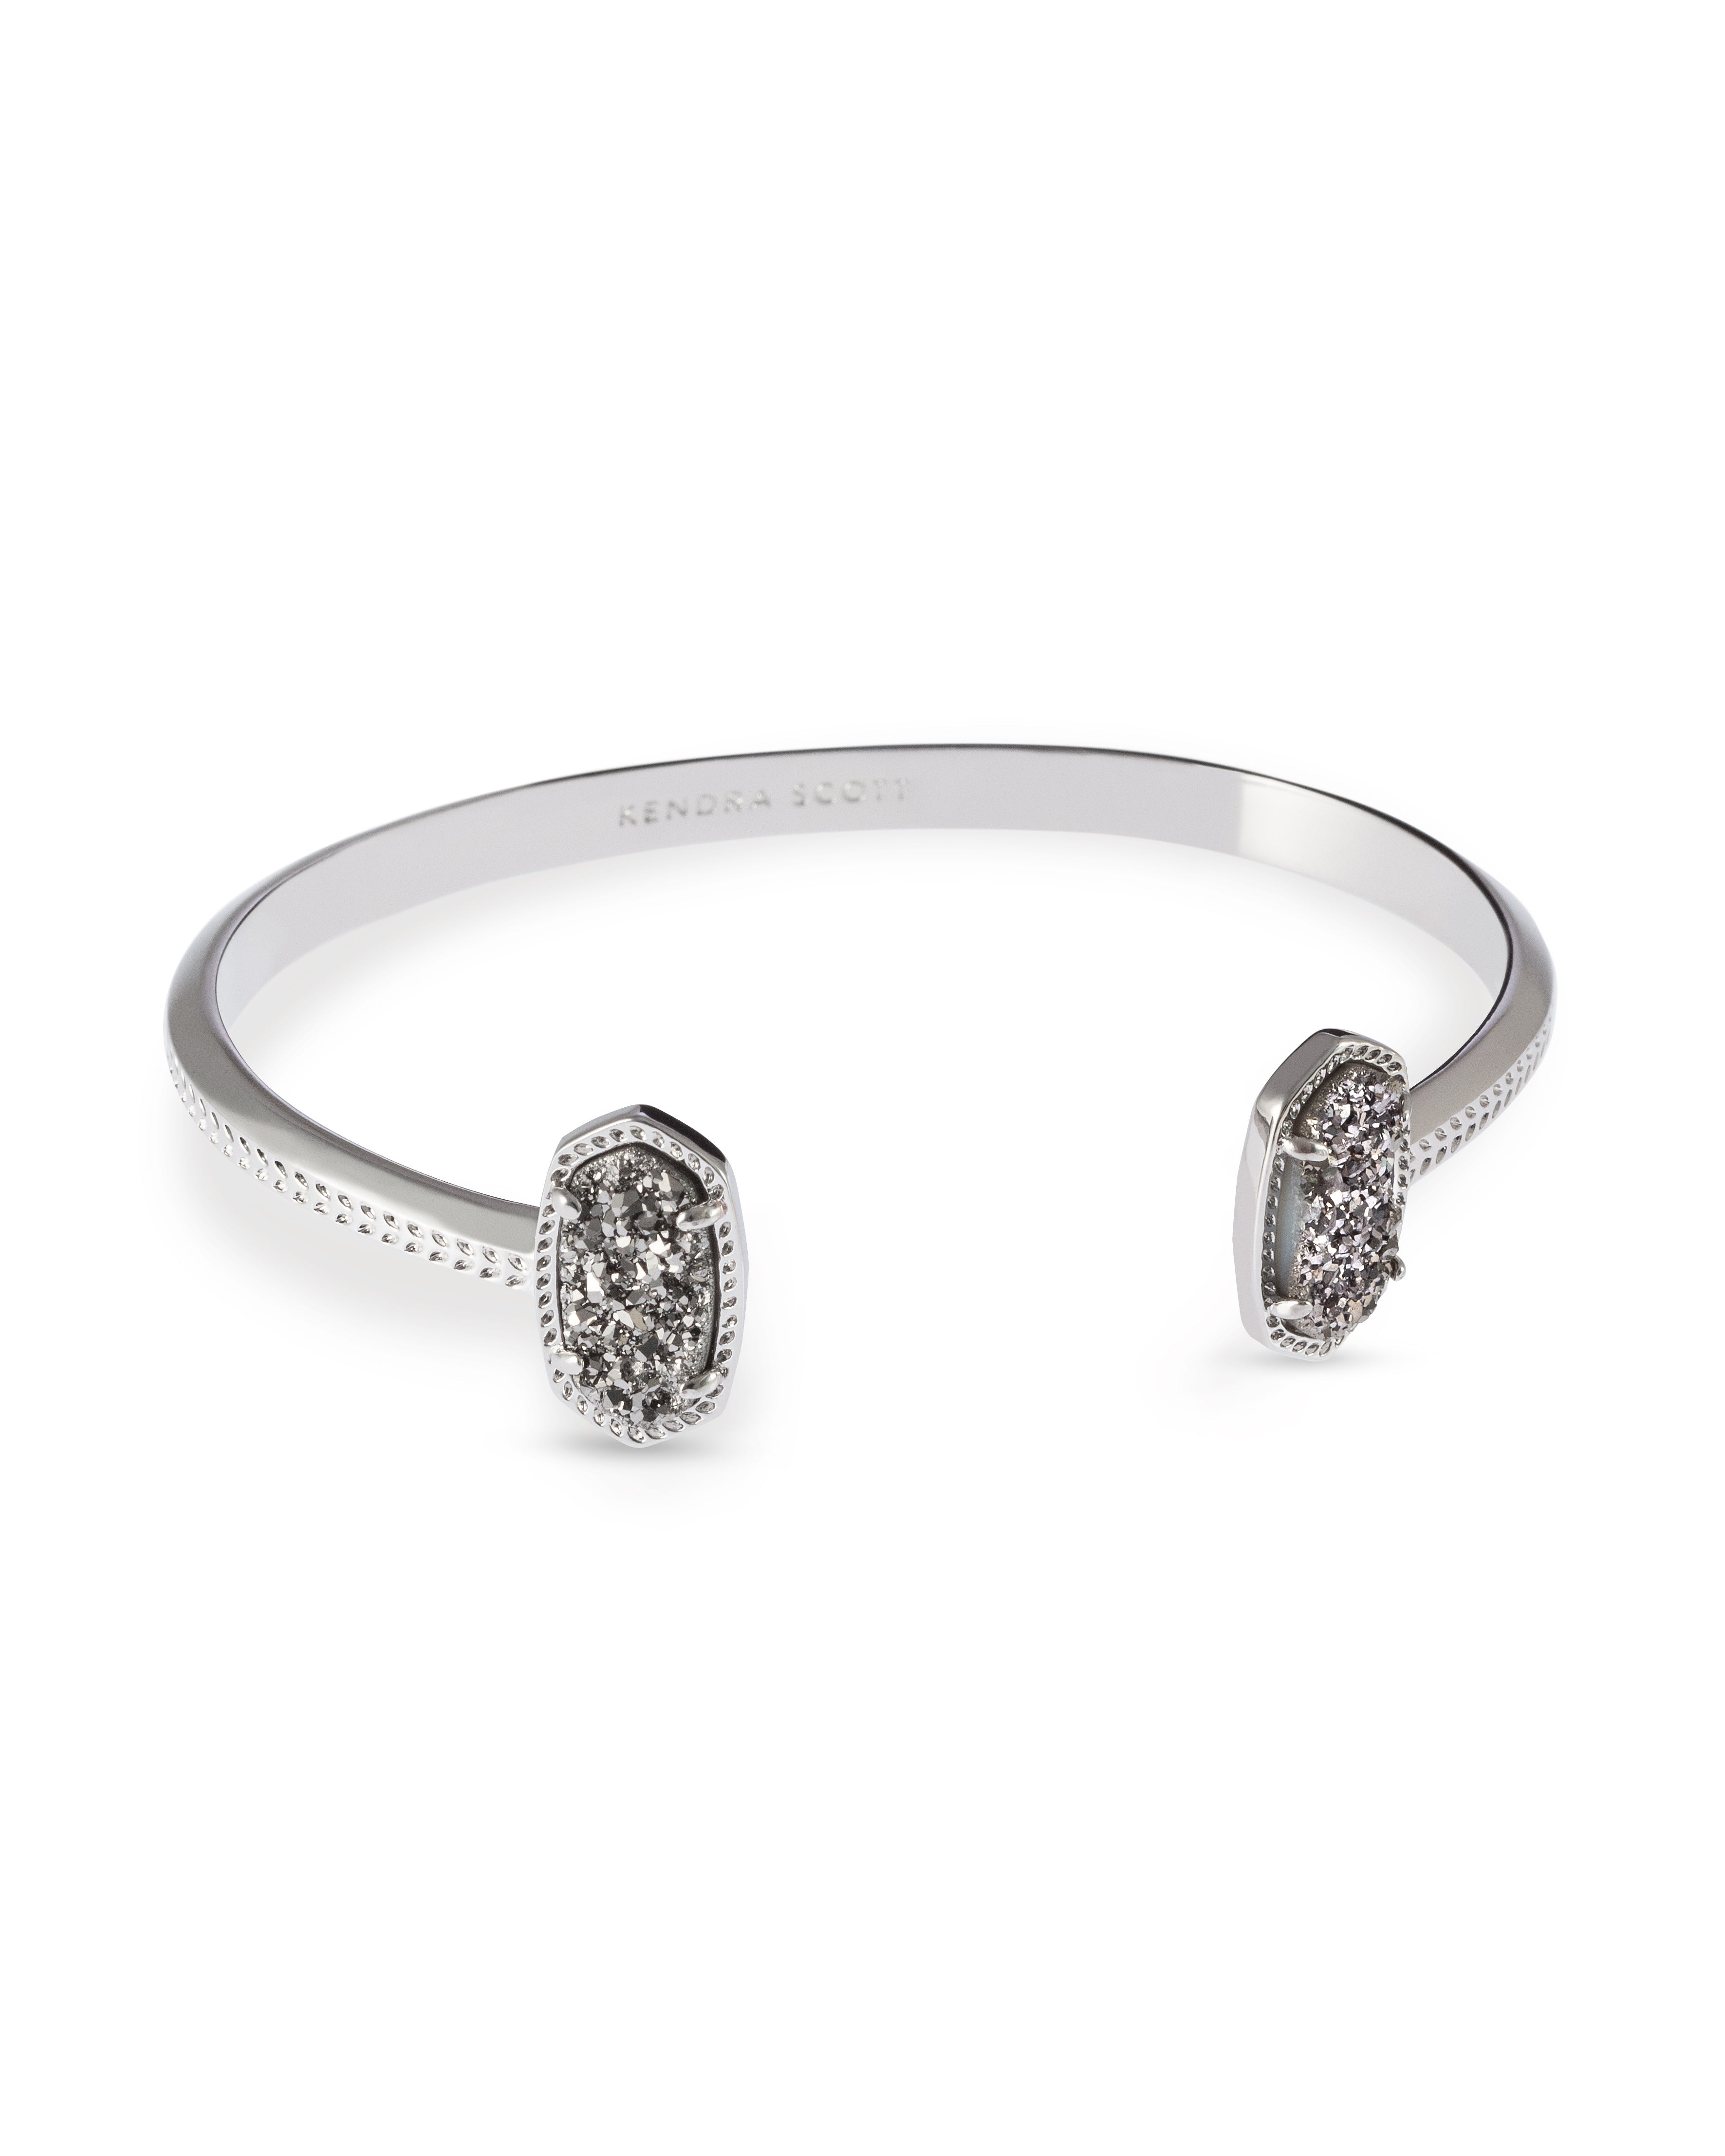 Emilie Silver Chain Bracelet in Platinum Drusy